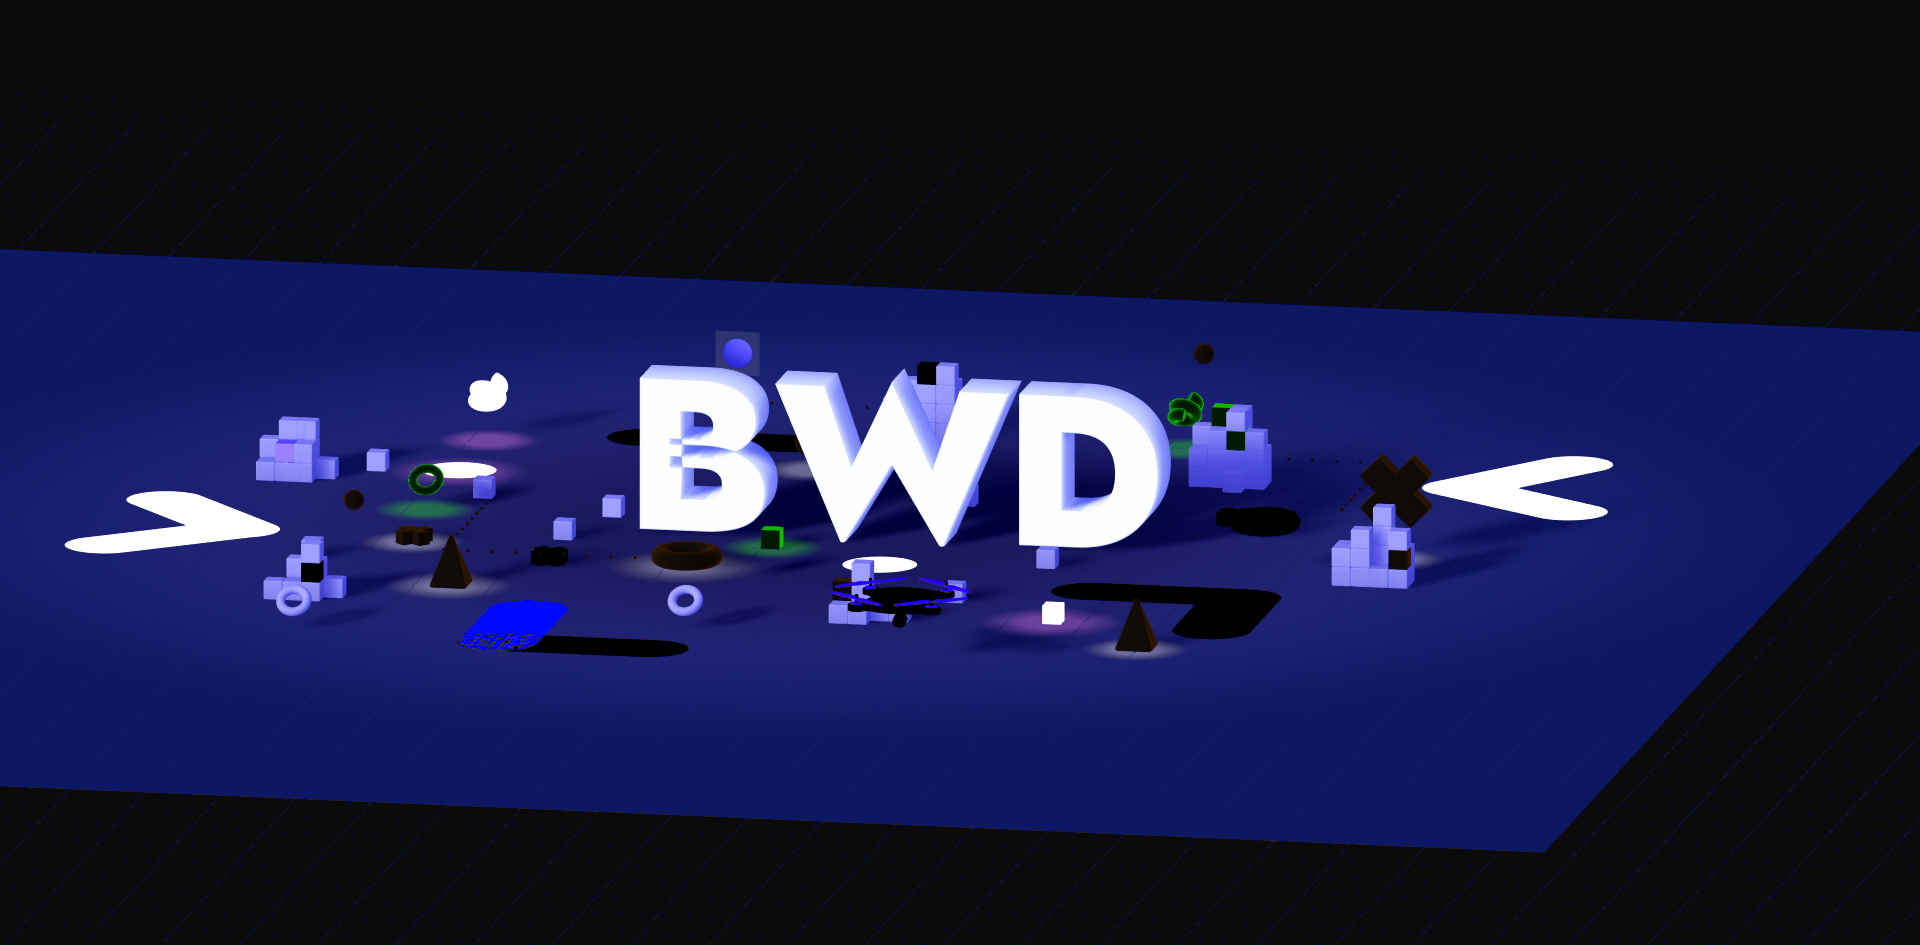 Beyond Website Design 3D Animation